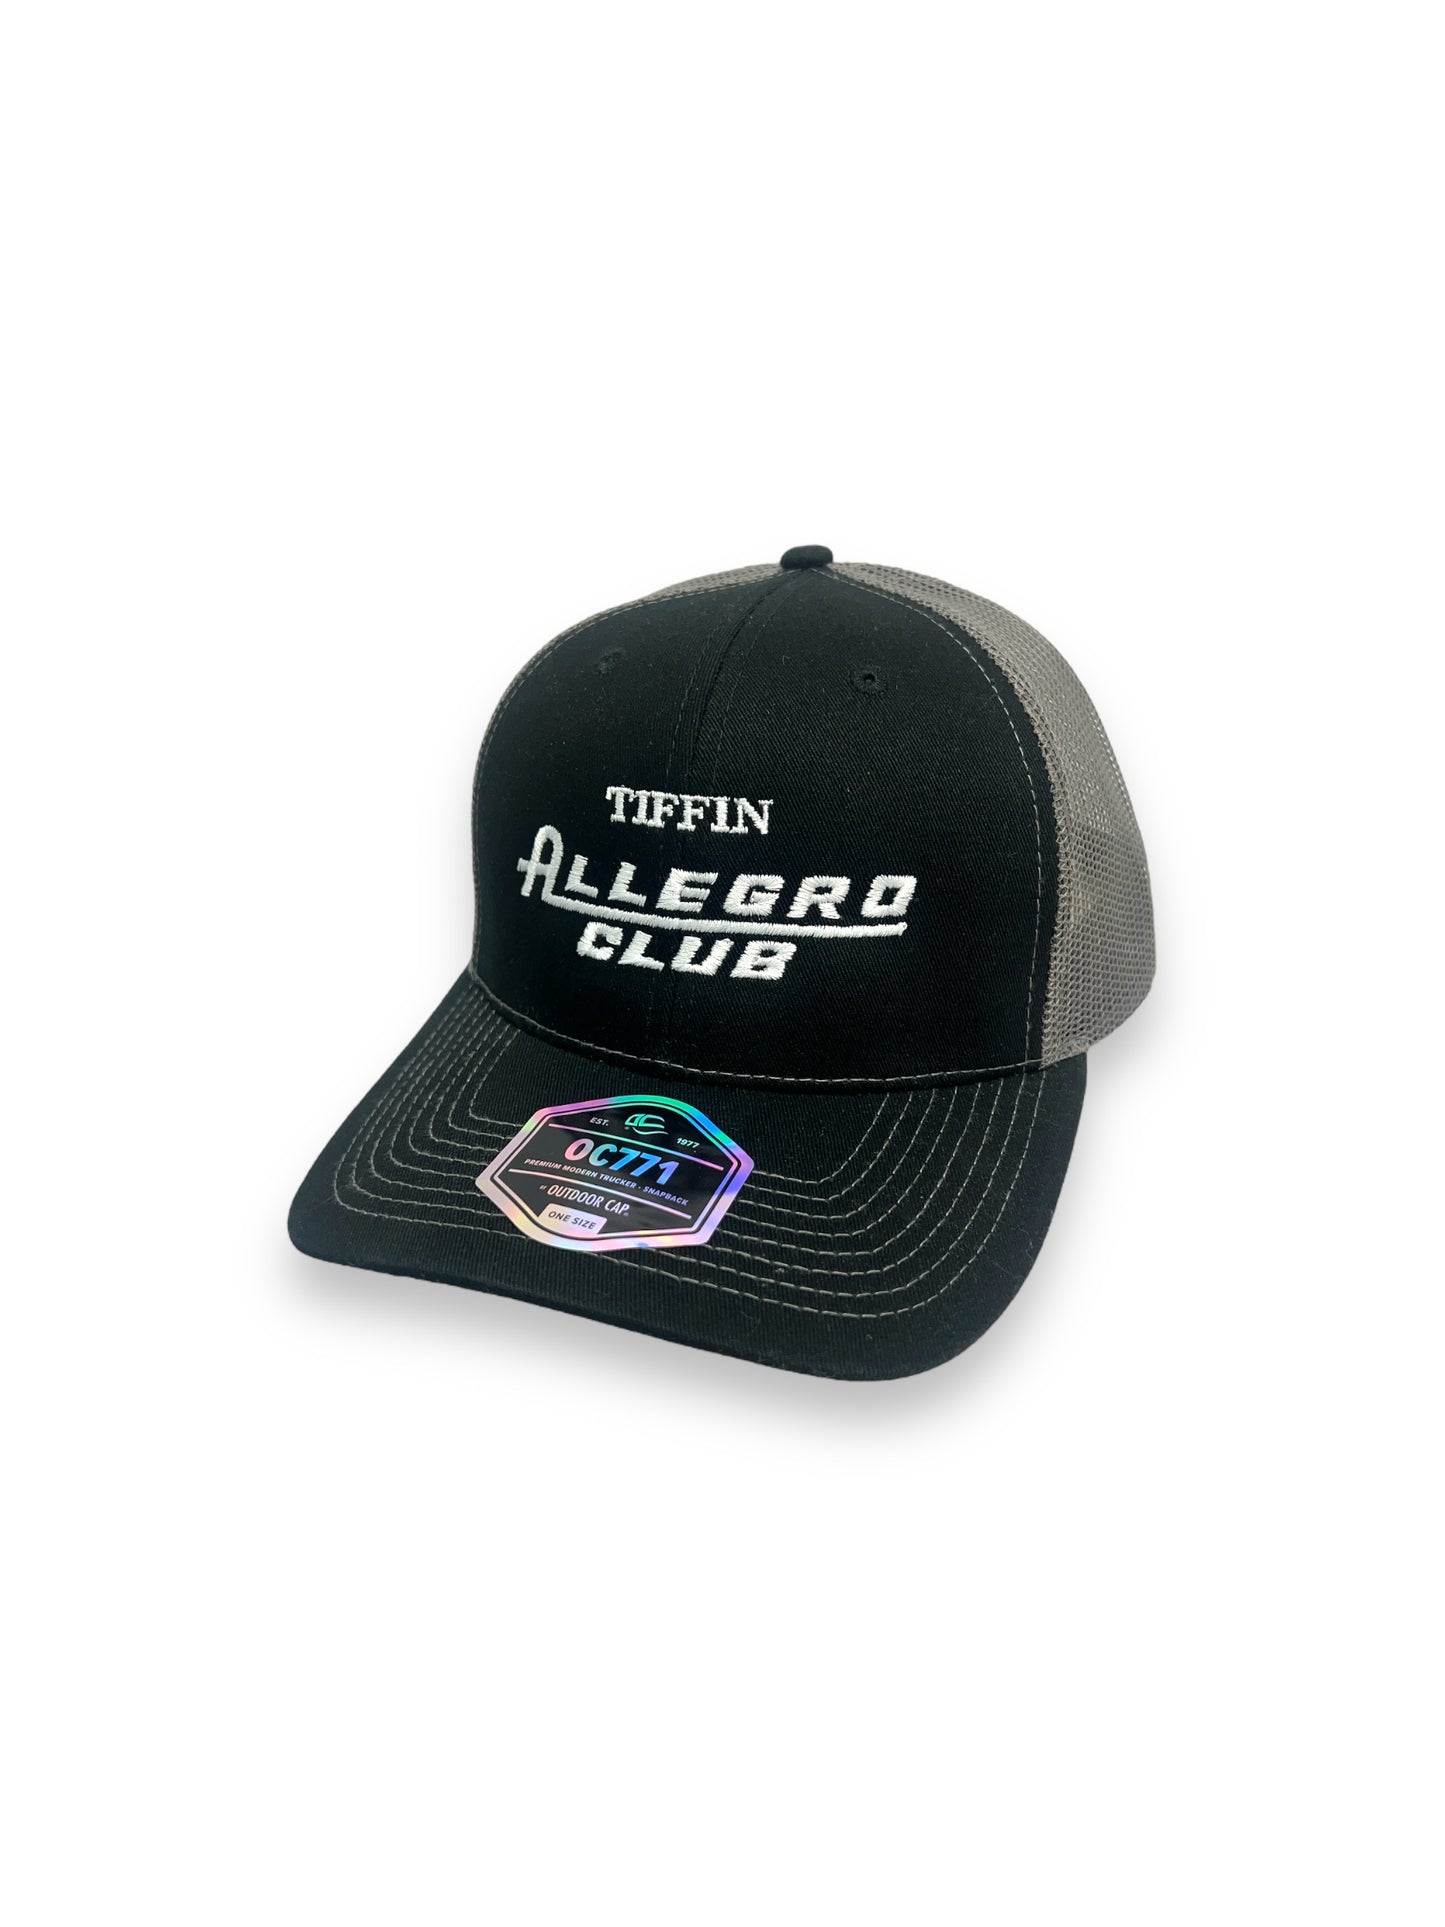 Hat - Tiffin Allegro Club - Adjustable